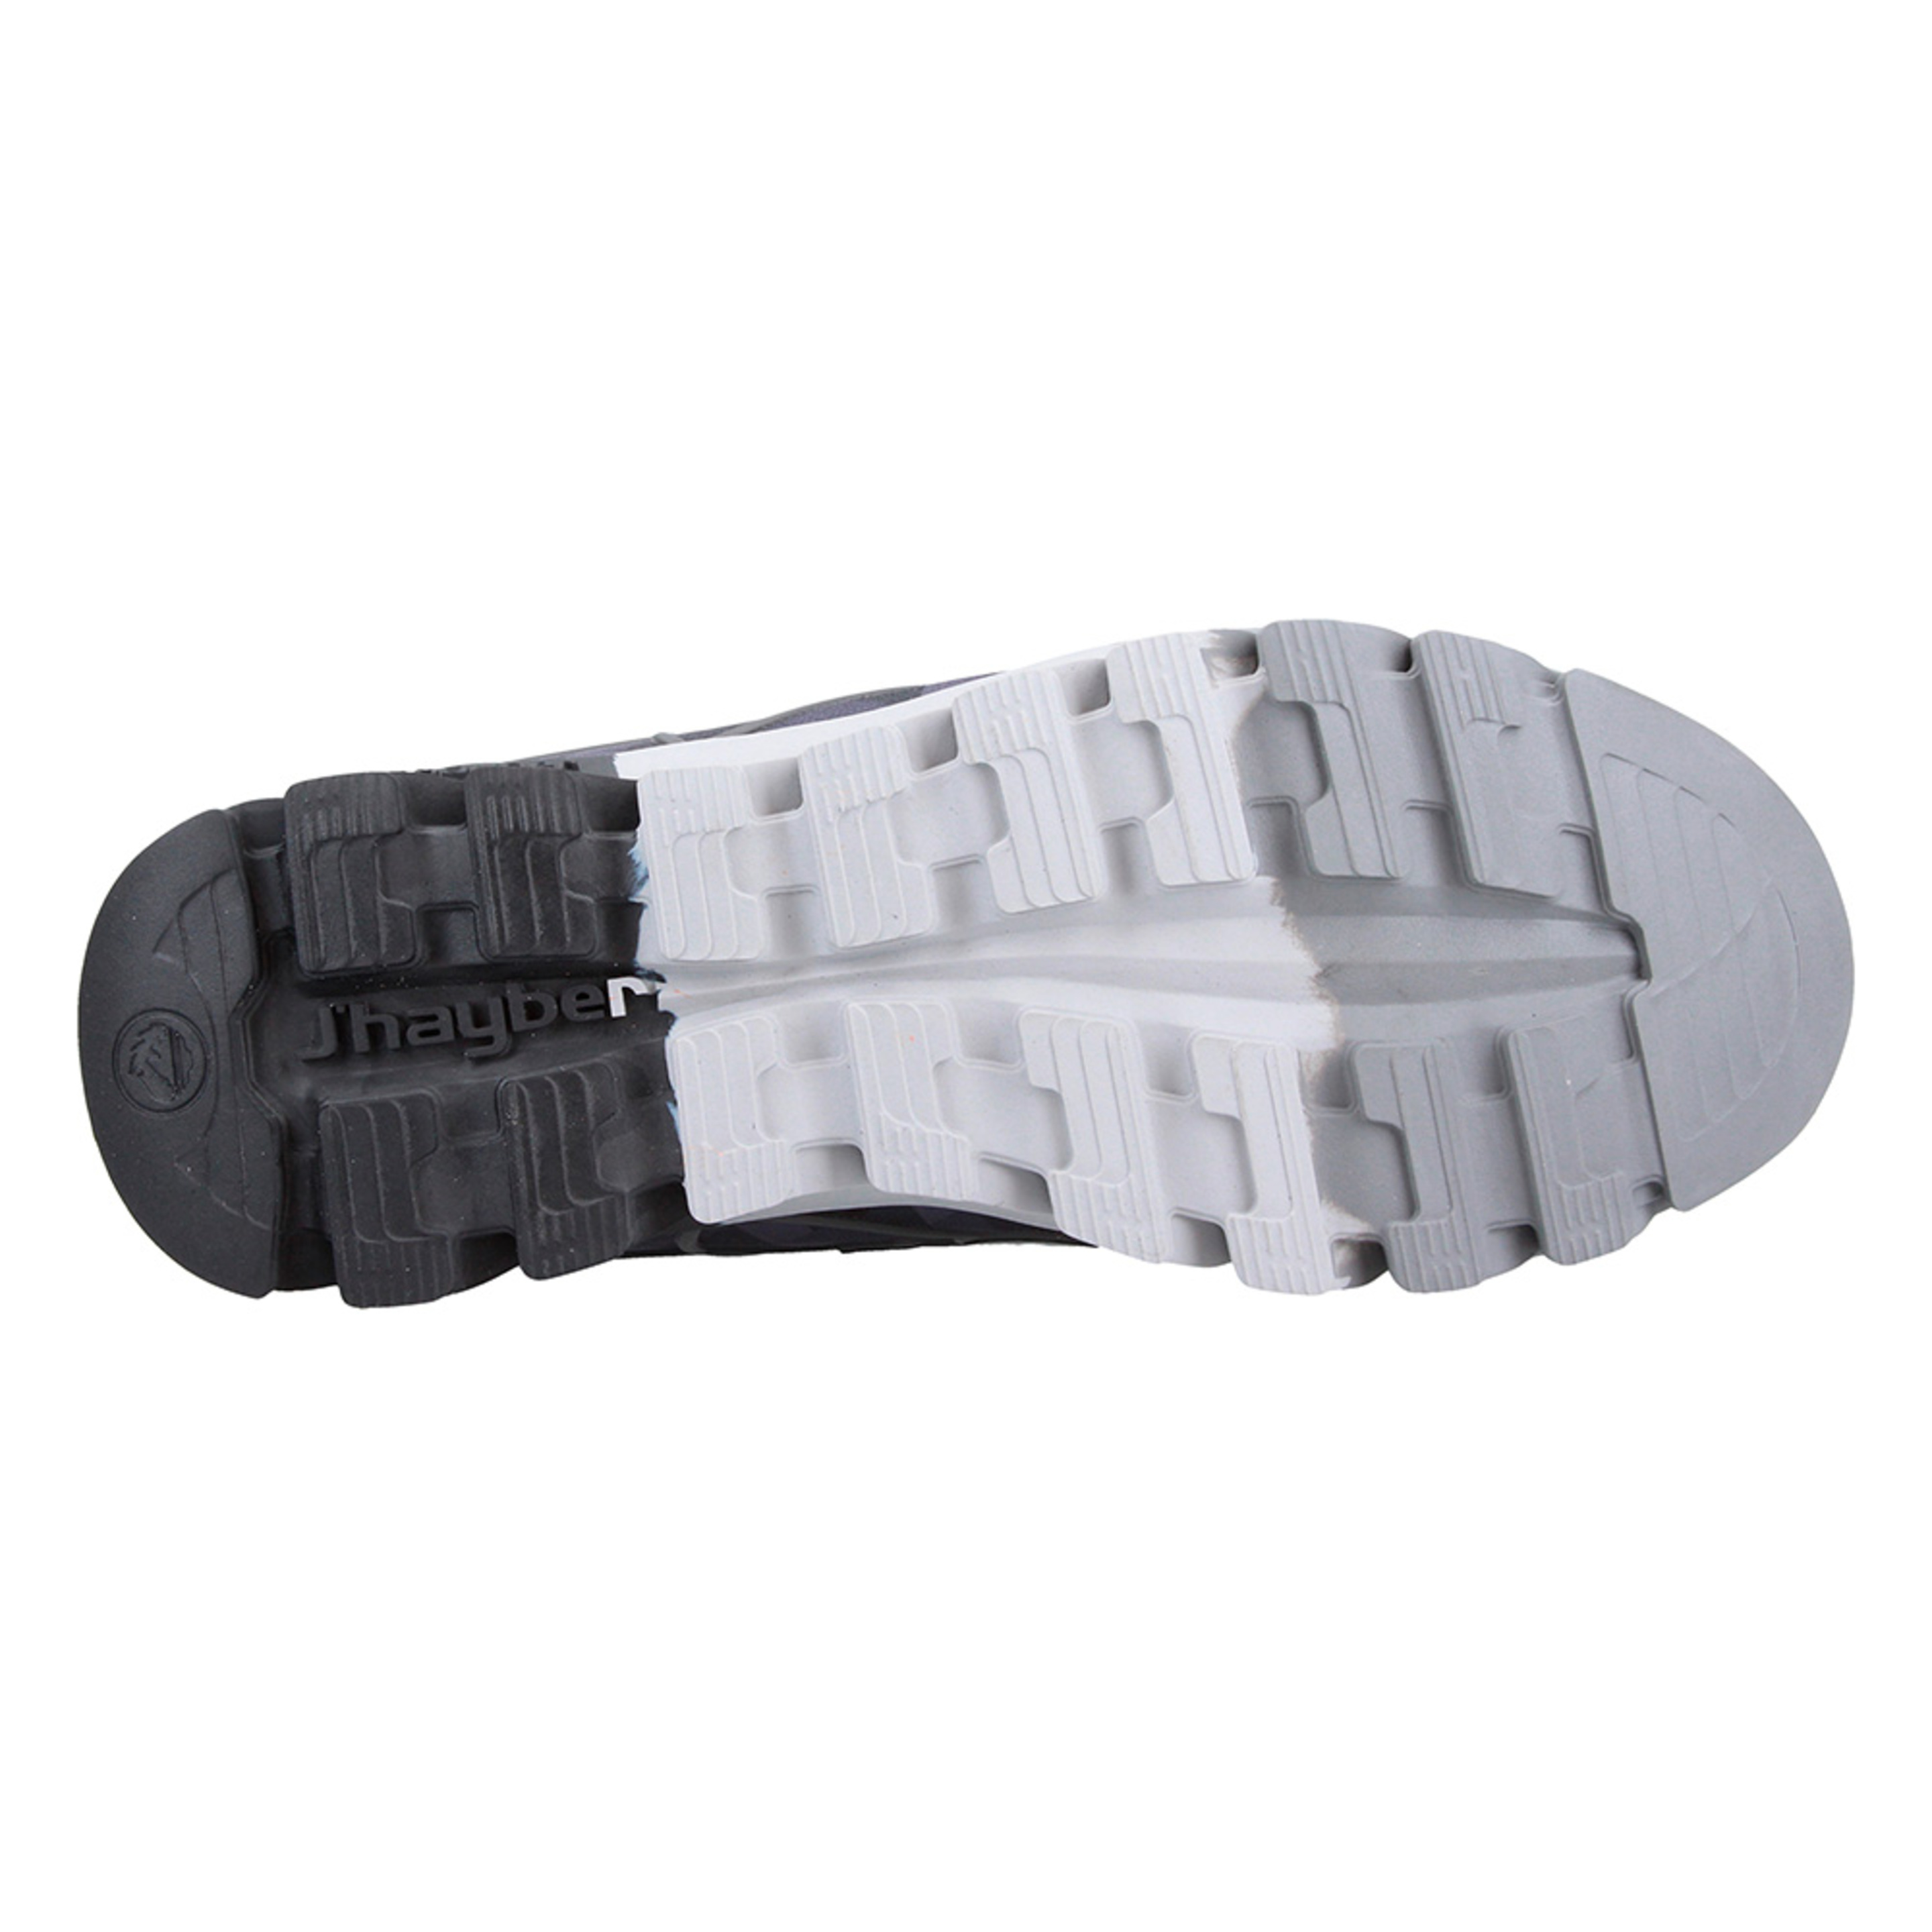 Zapato De Seguridad Bolt De J'Hayber Works - Gris/Negro - Bolt S1p  MKP